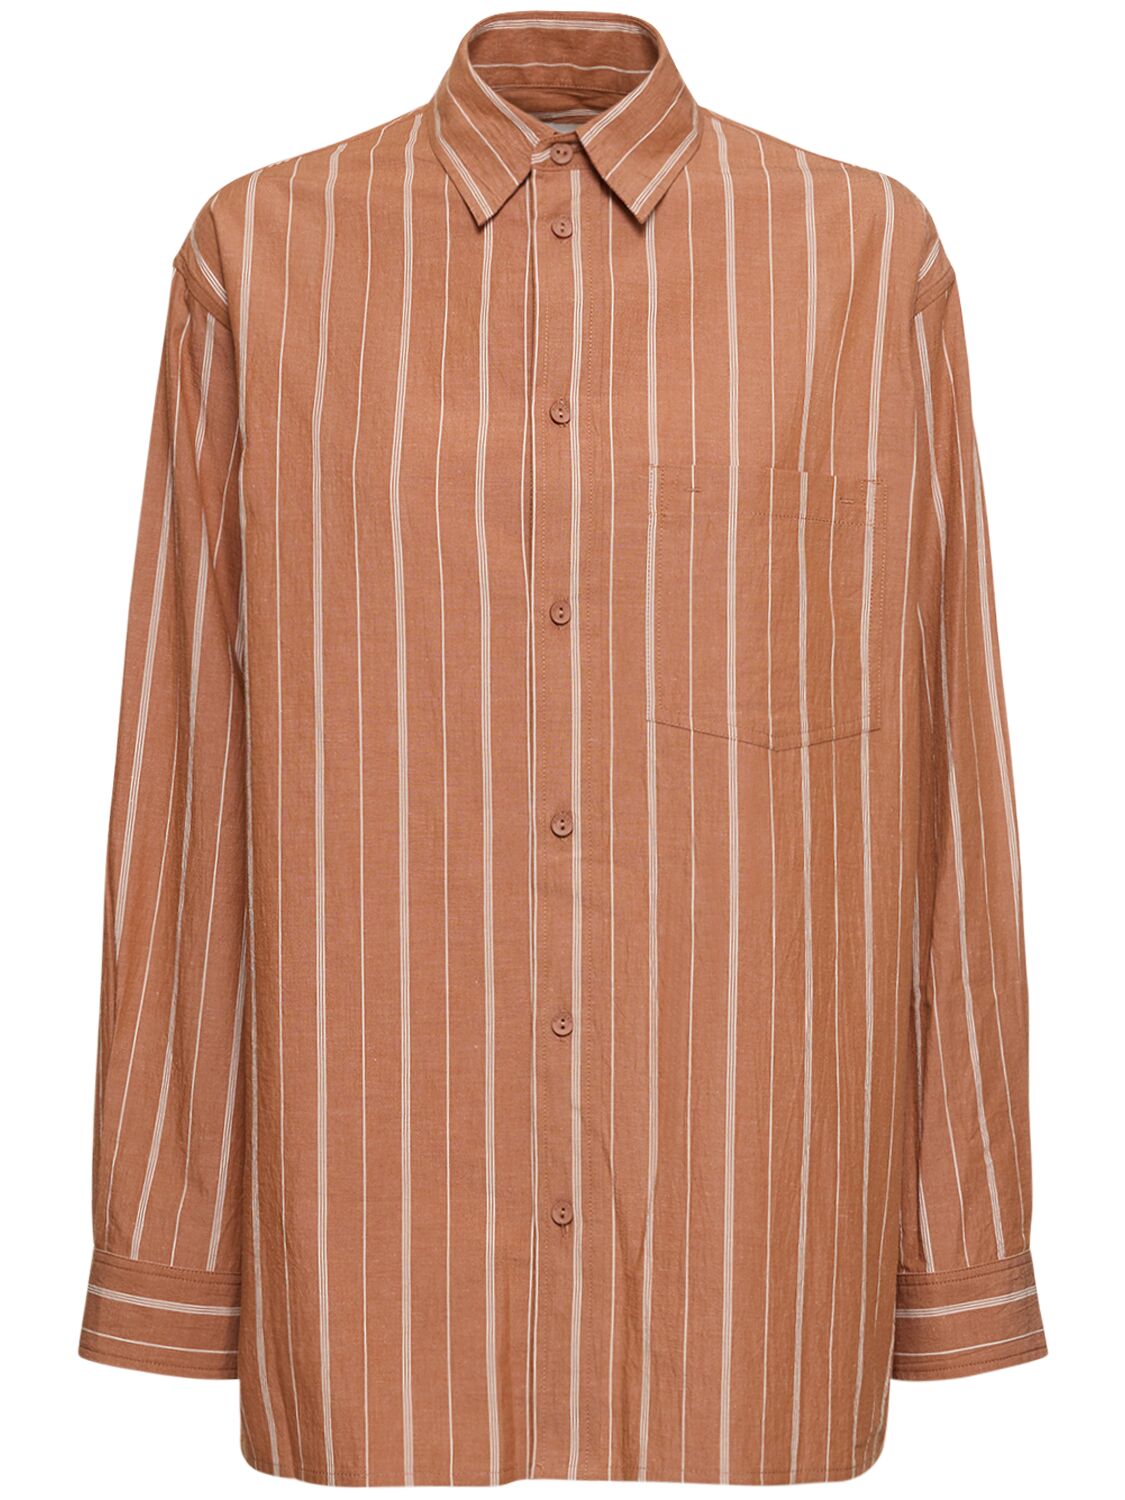 Image of Striped Cotton & Linen Shirt